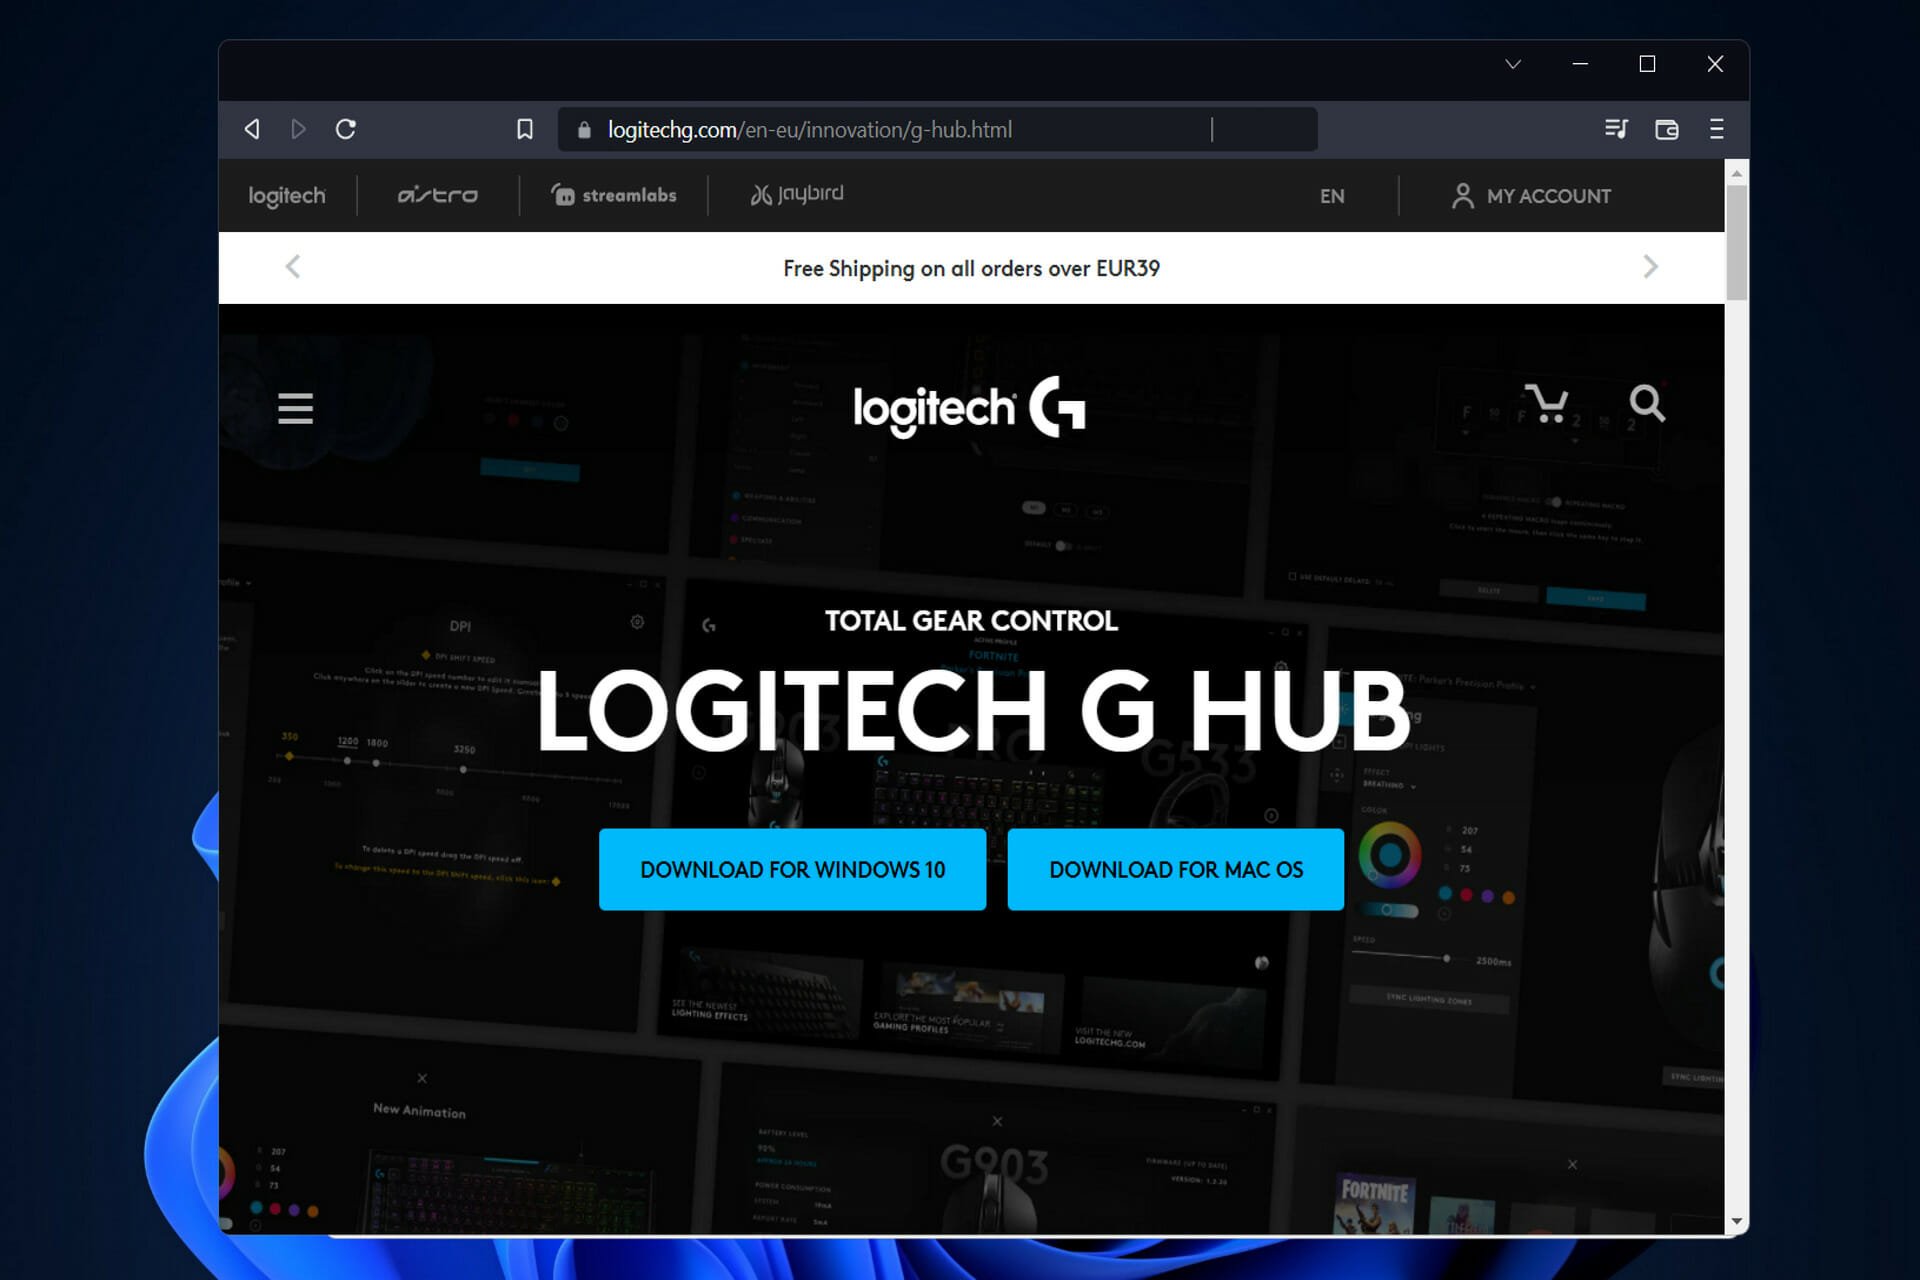 logitech-g-hub-page logitech g hub windows 11 download